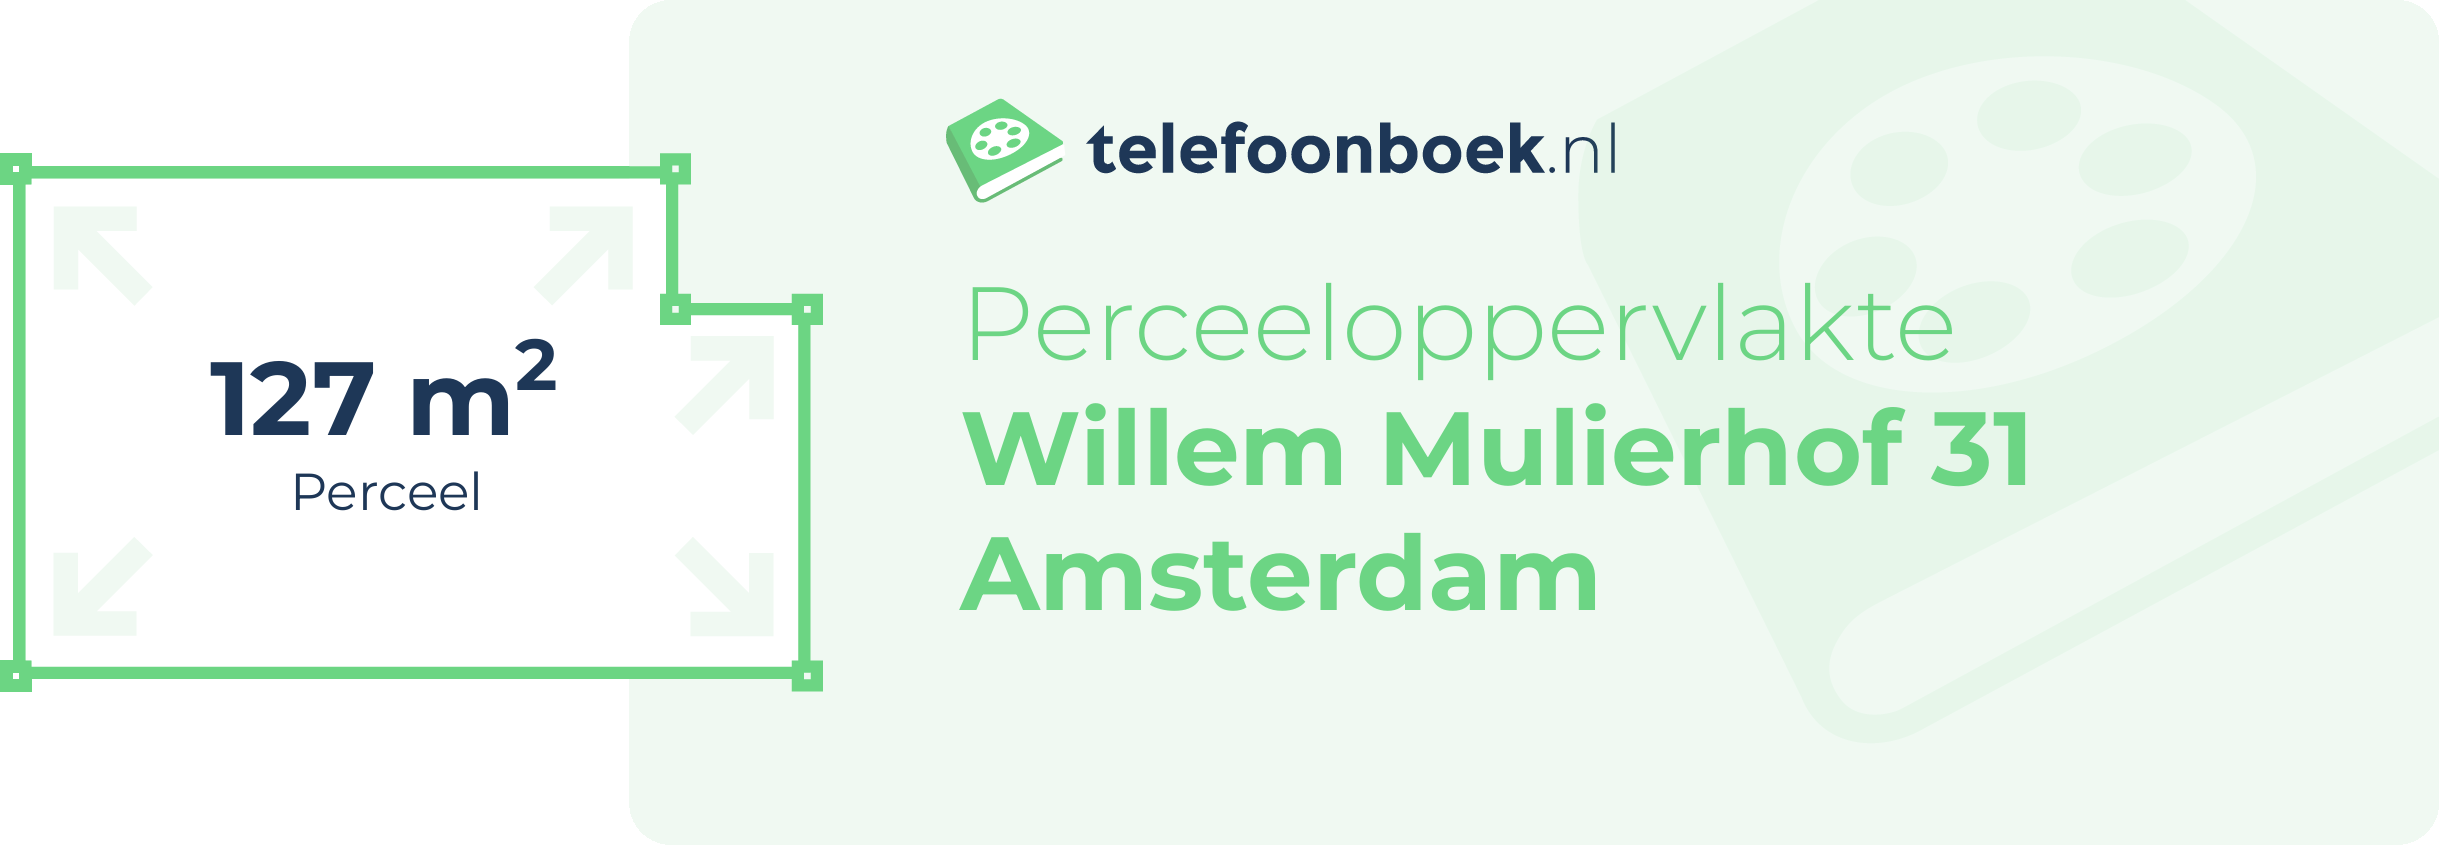 Perceeloppervlakte Willem Mulierhof 31 Amsterdam